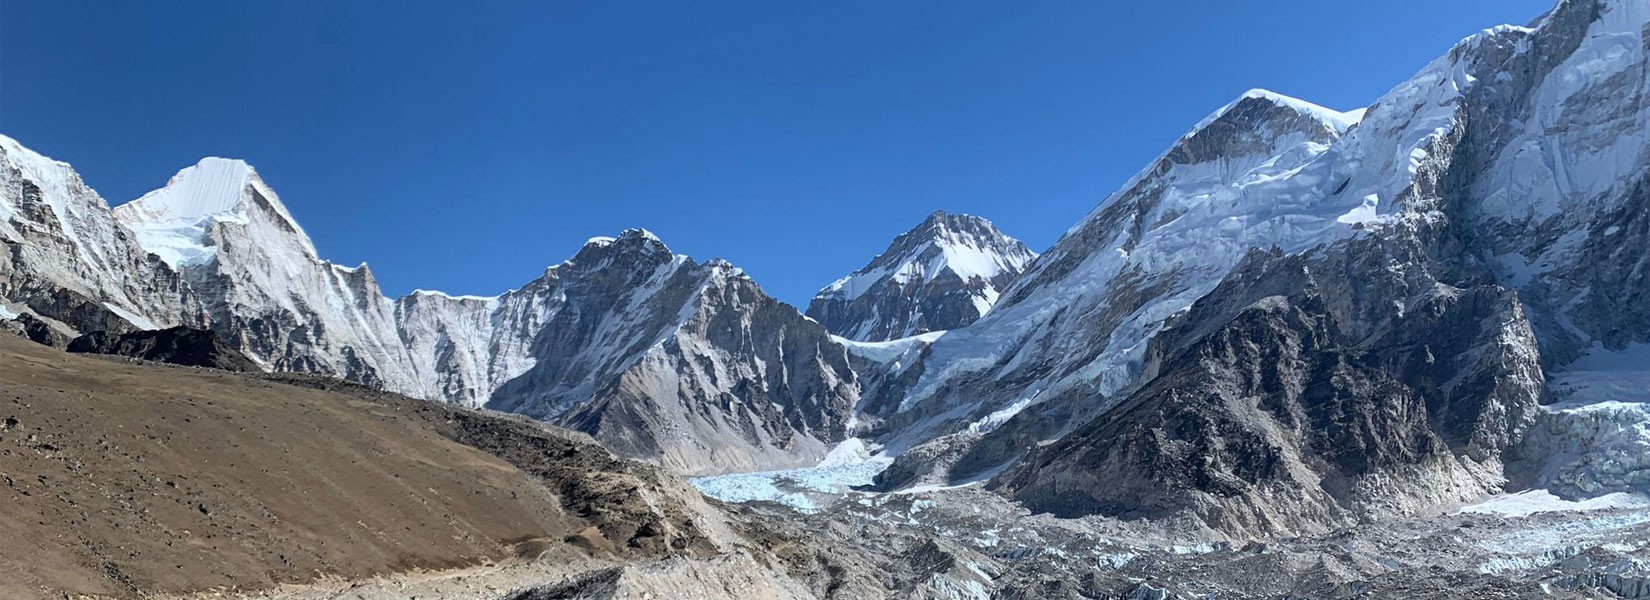 5 Days Everest Base Camp Trek banner